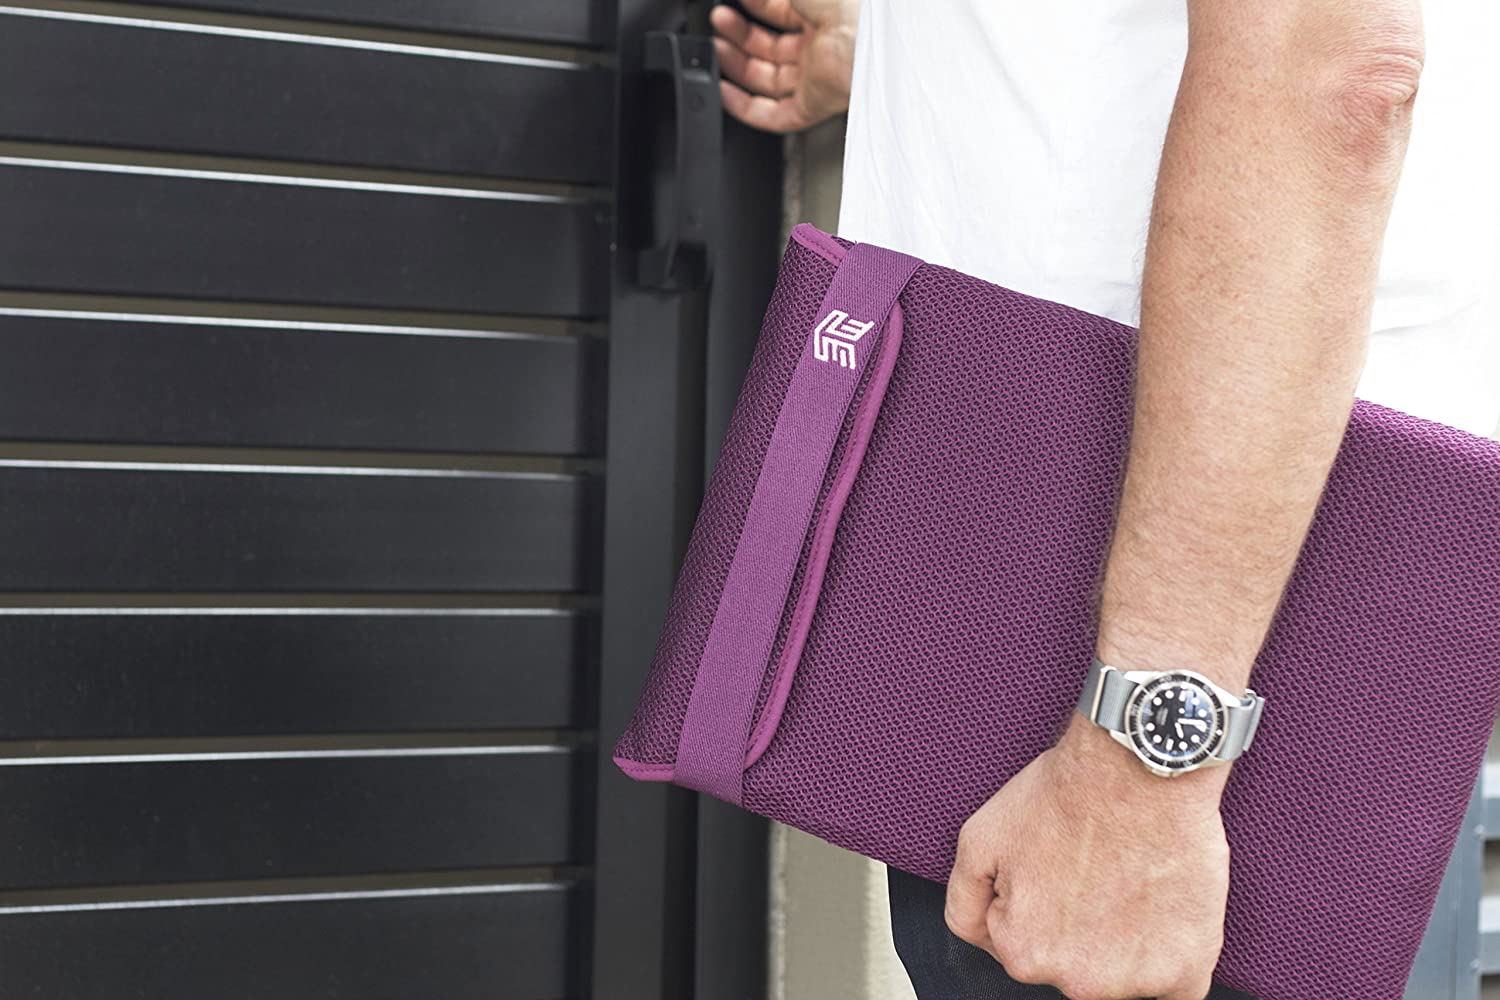 STM Sleeve Knit Glove Macbook Pro 15-inch